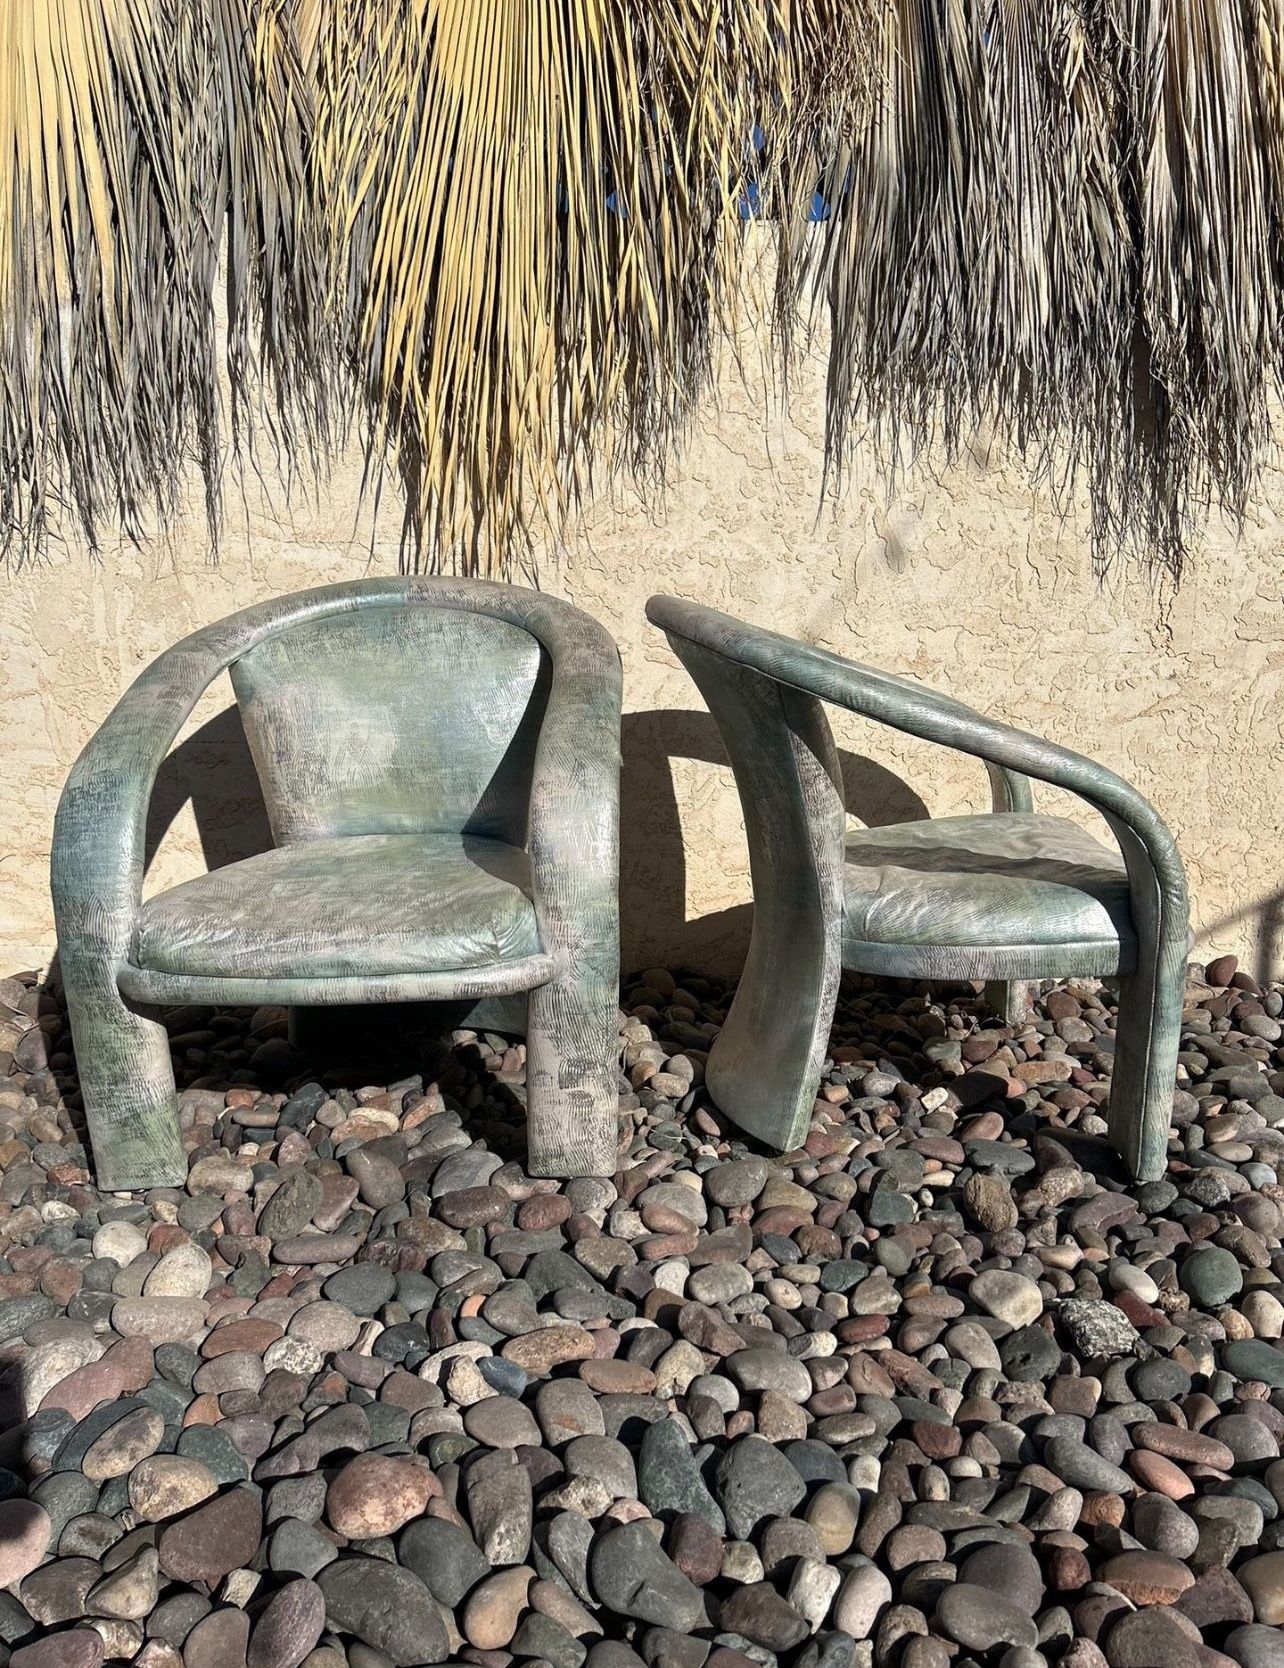 Marge Carson Metallic 1992 Sculptural Lounge Chairs